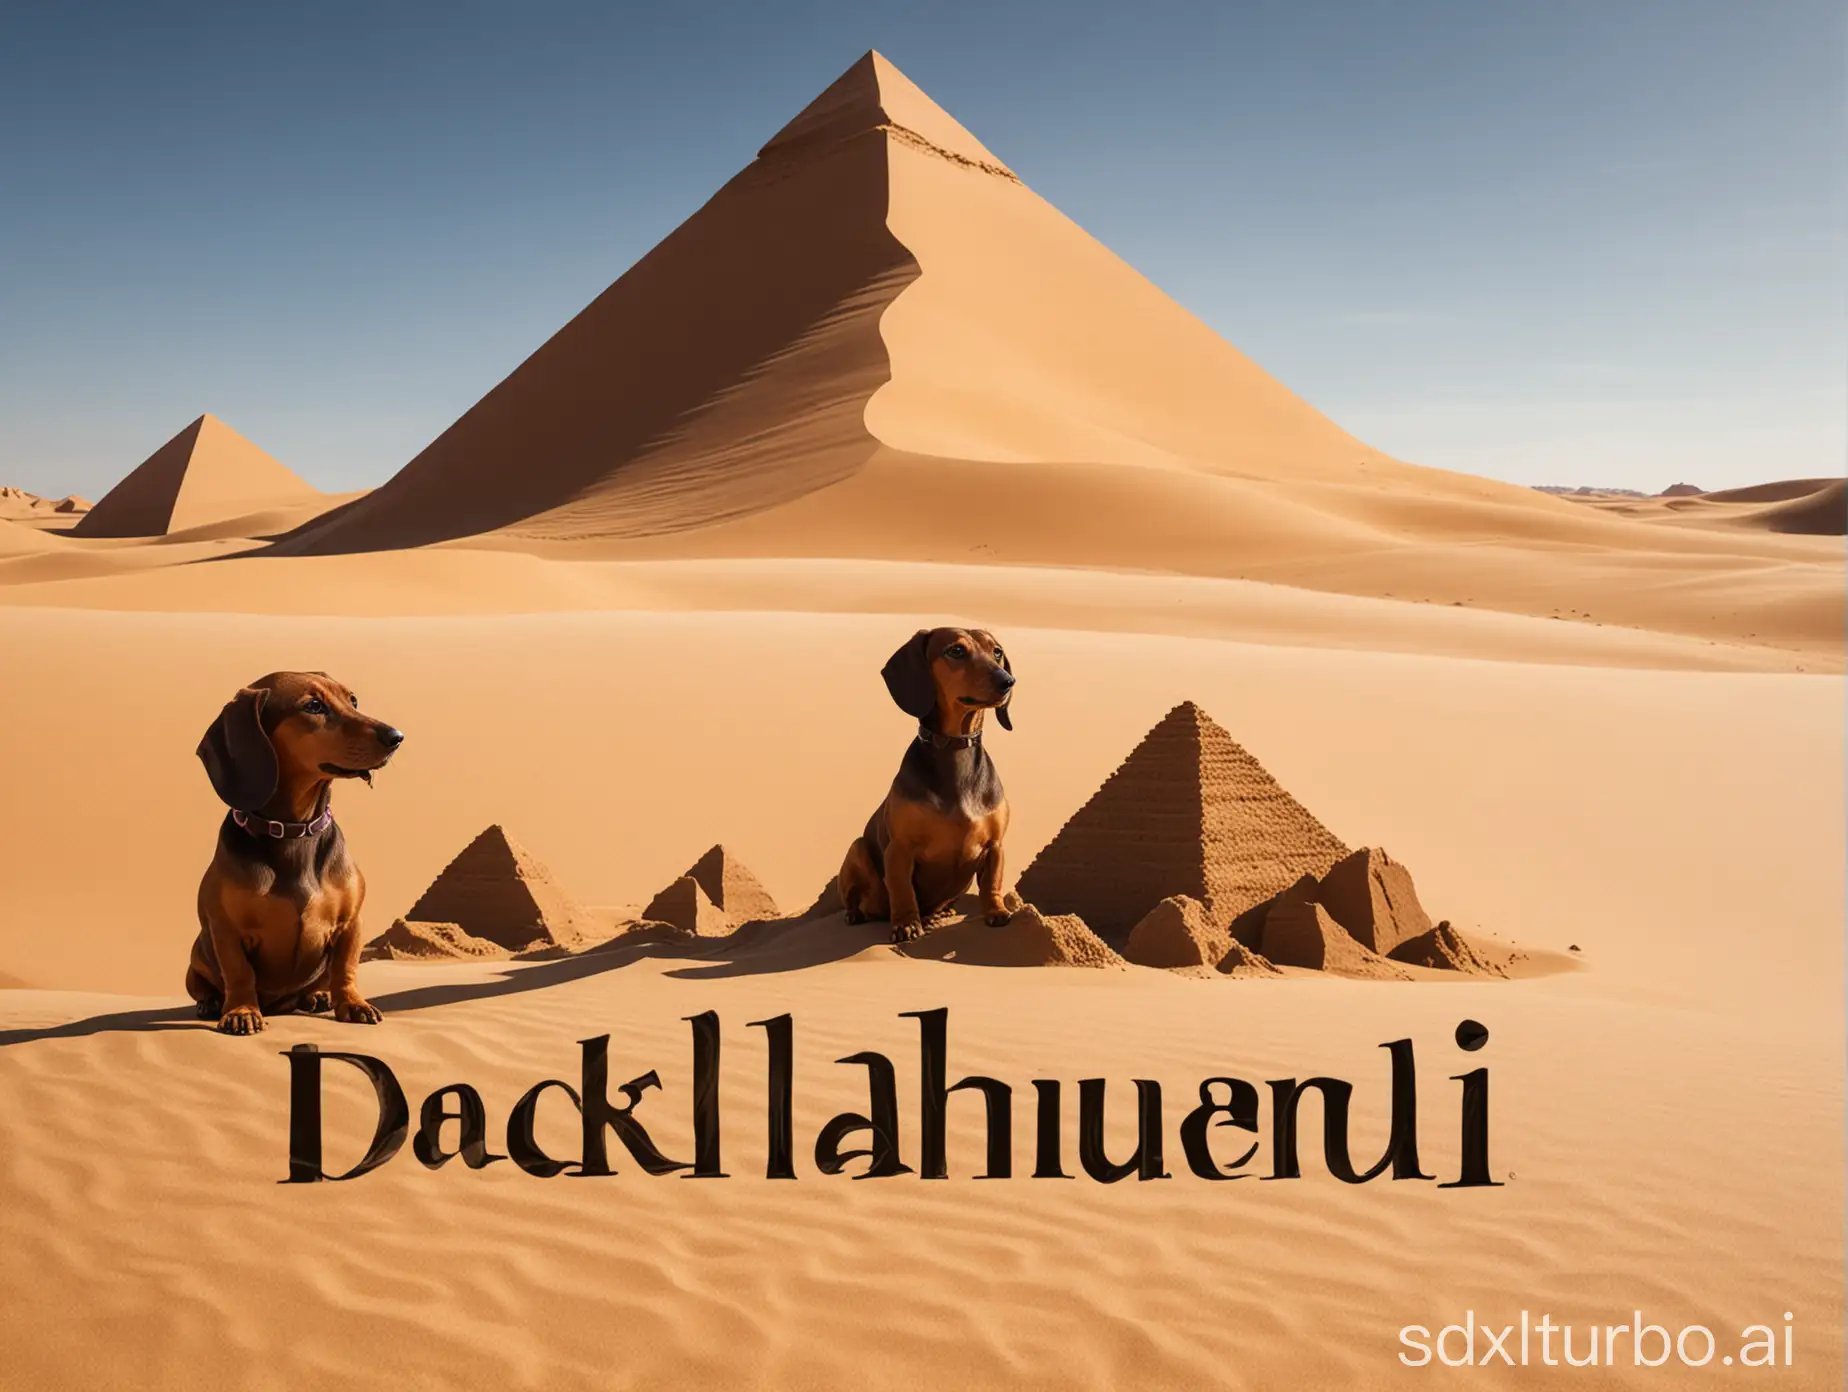 Dachshund-Logo-with-Sand-Dunes-and-Pyramids